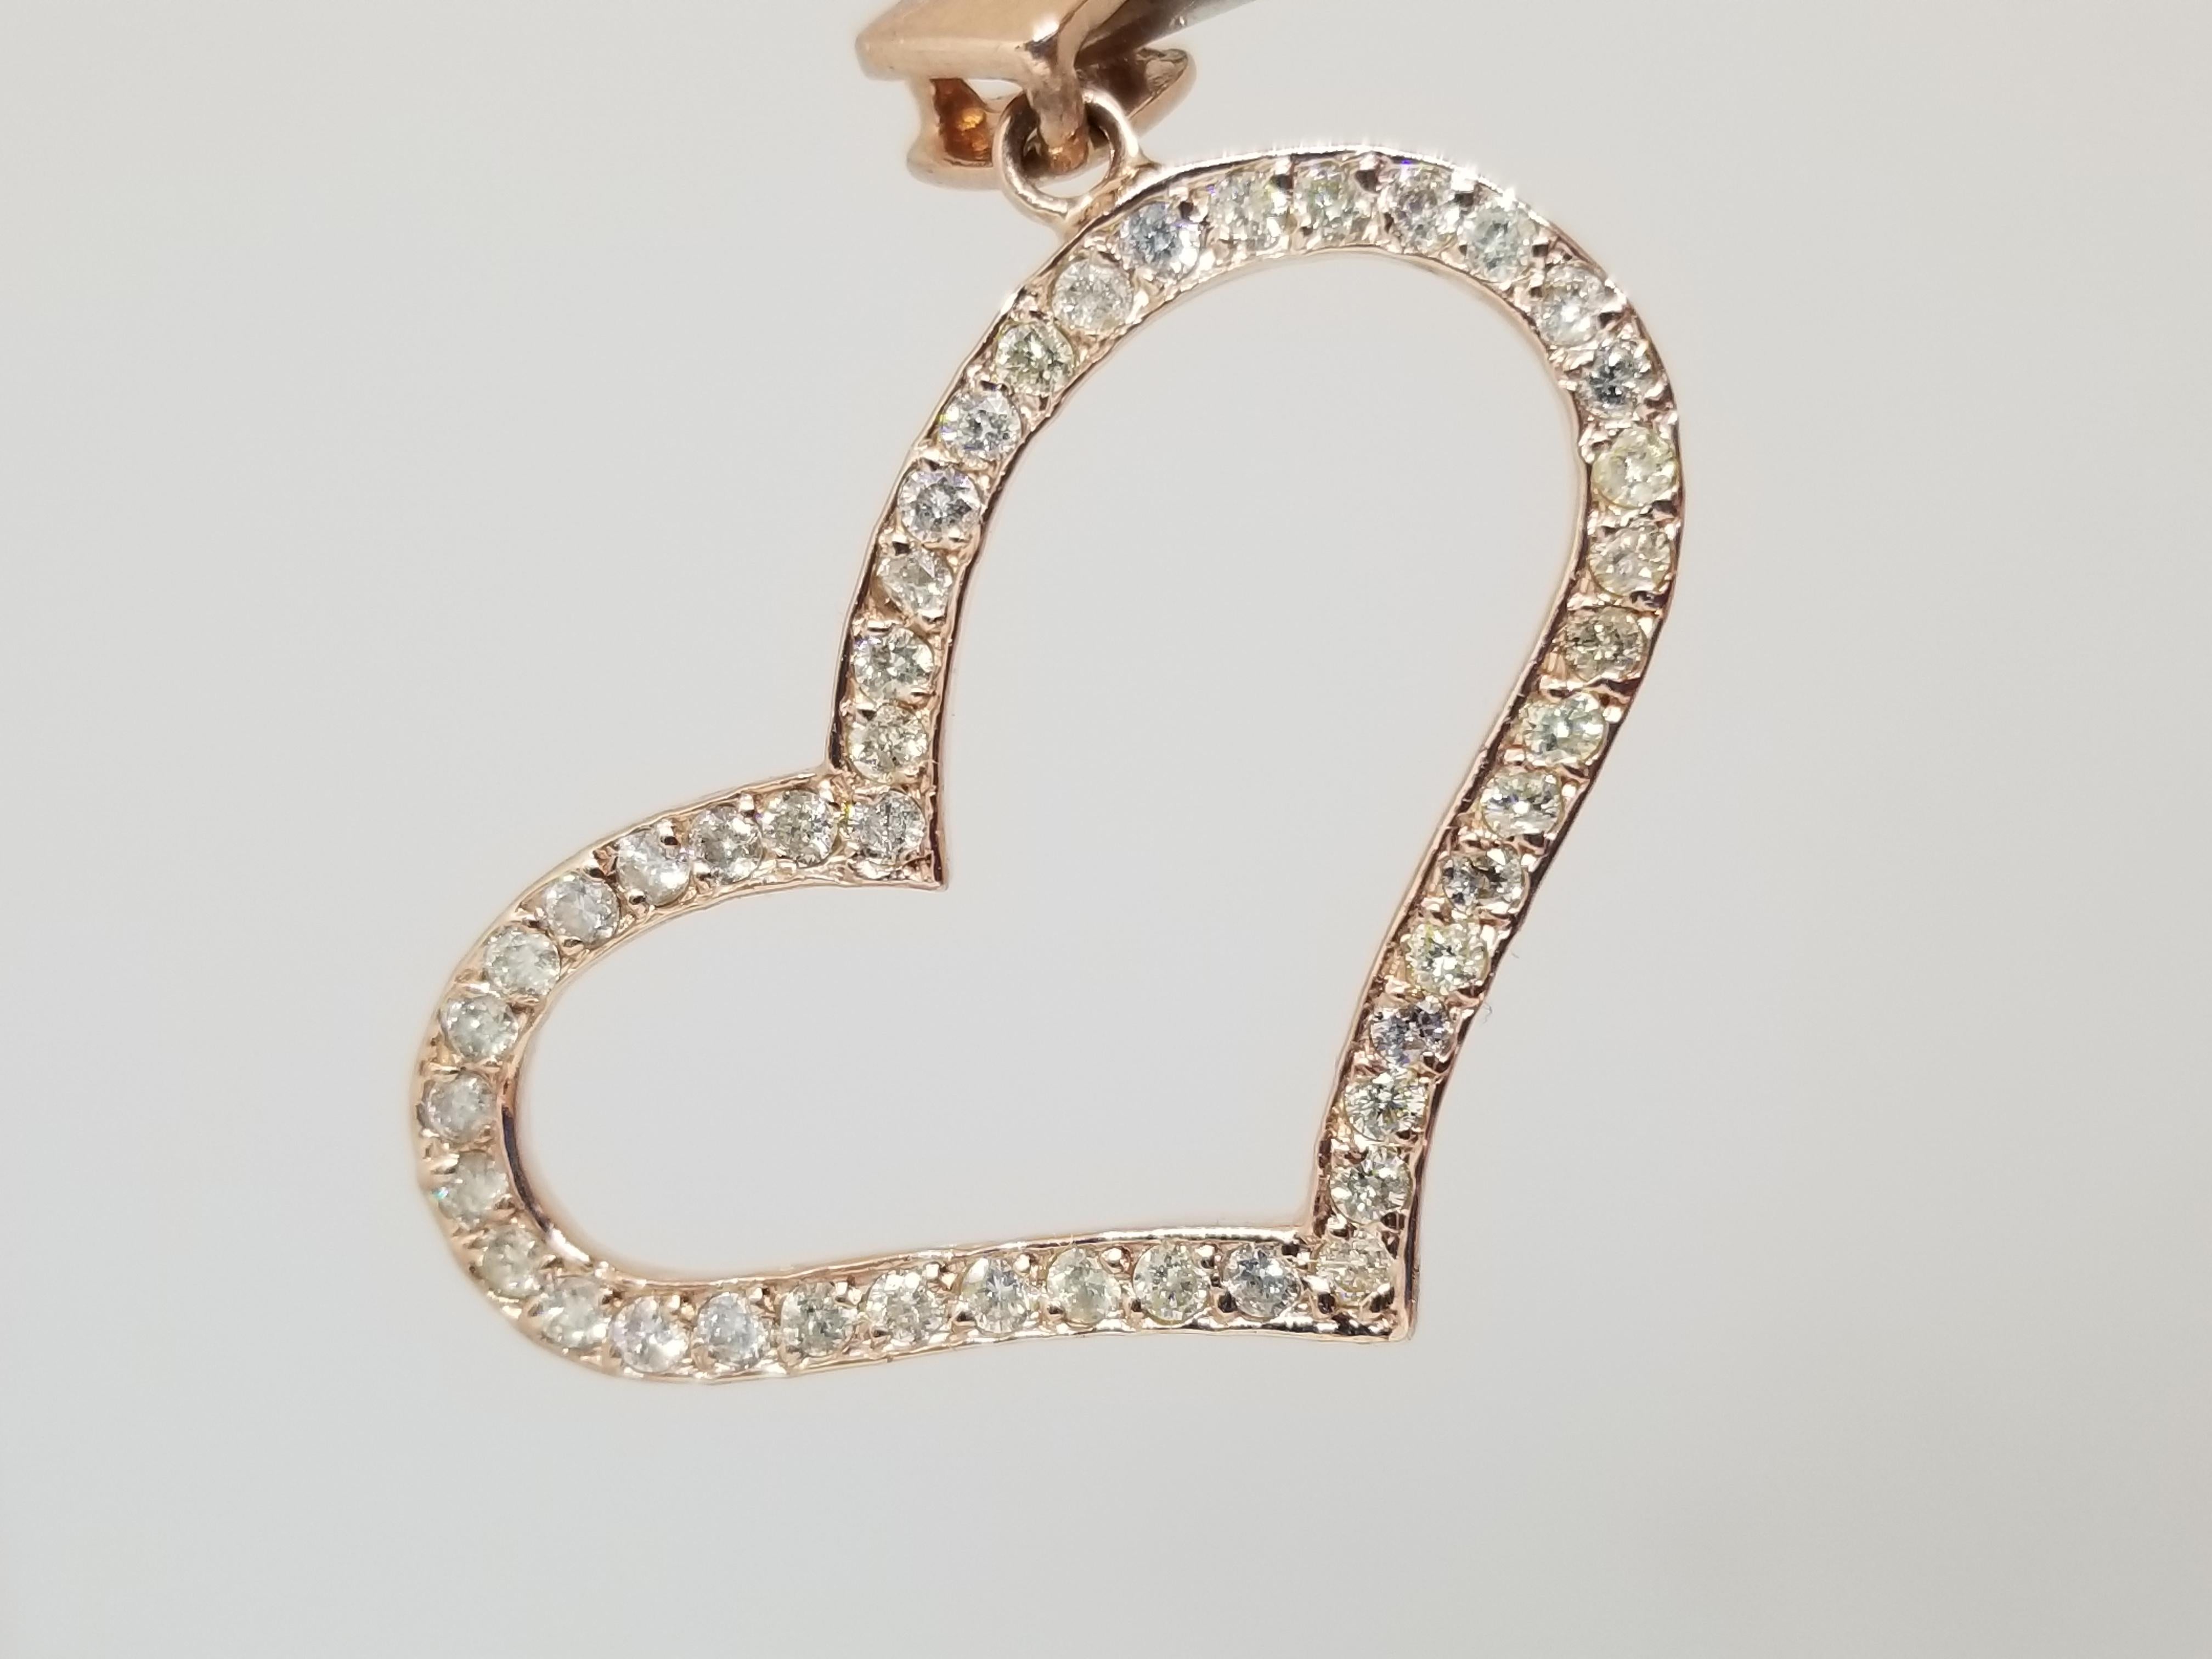 0.70 ct heart shape pendant 14k Rose gold. natural diamonds.
Average Color I, Clarity I